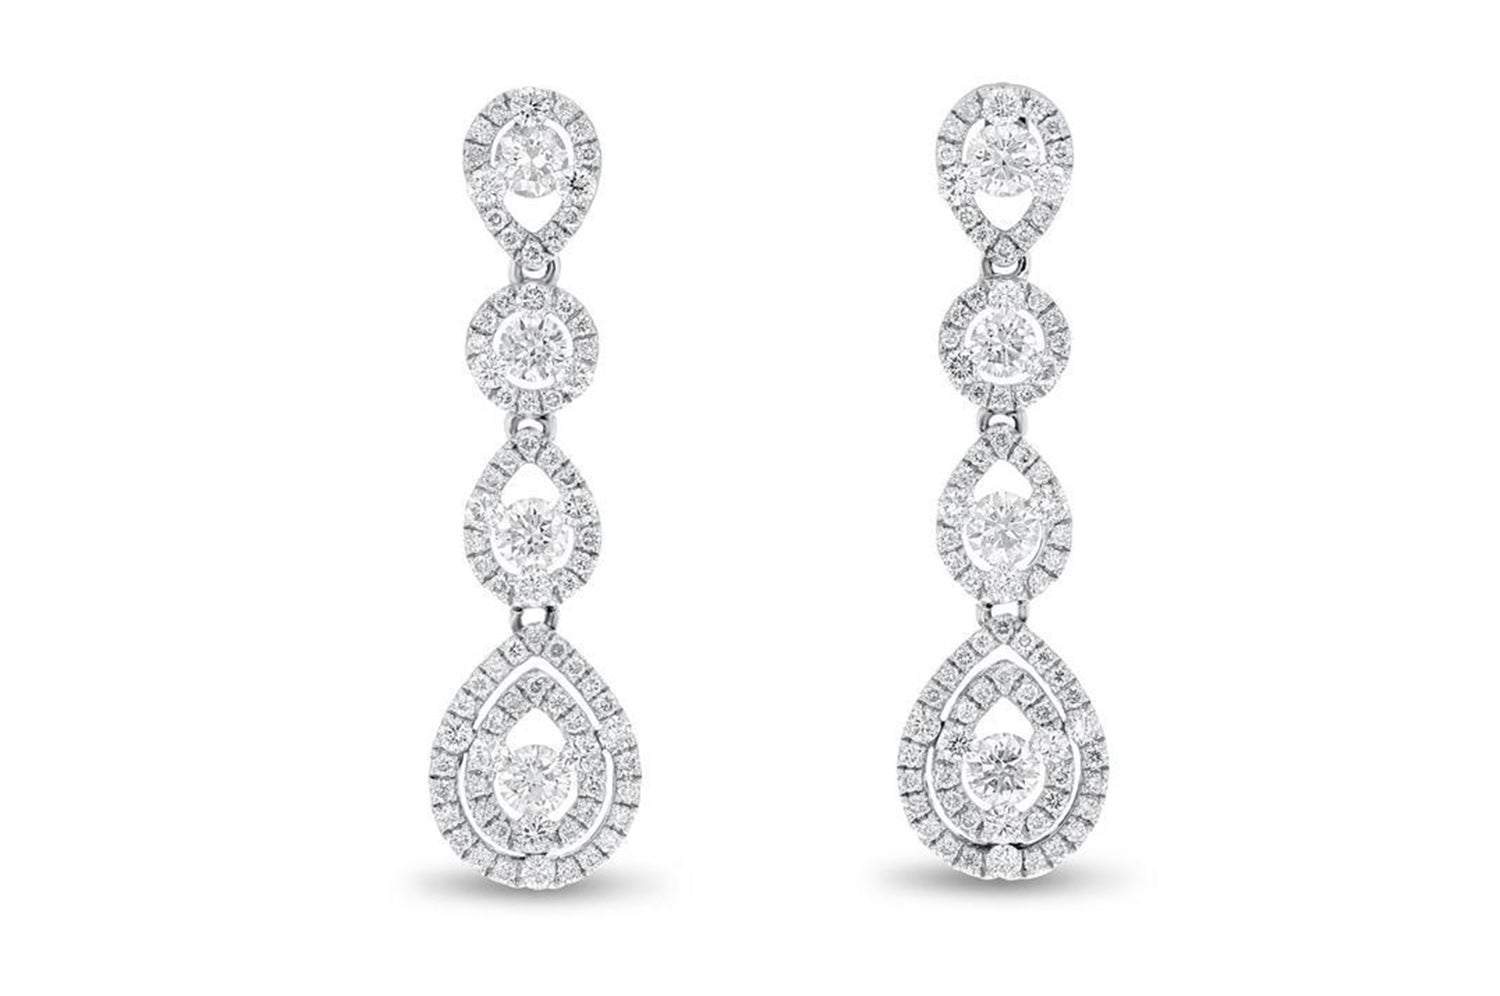 'Lorraine' 18K White Gold Diamond Earrings, 1.04 Carats